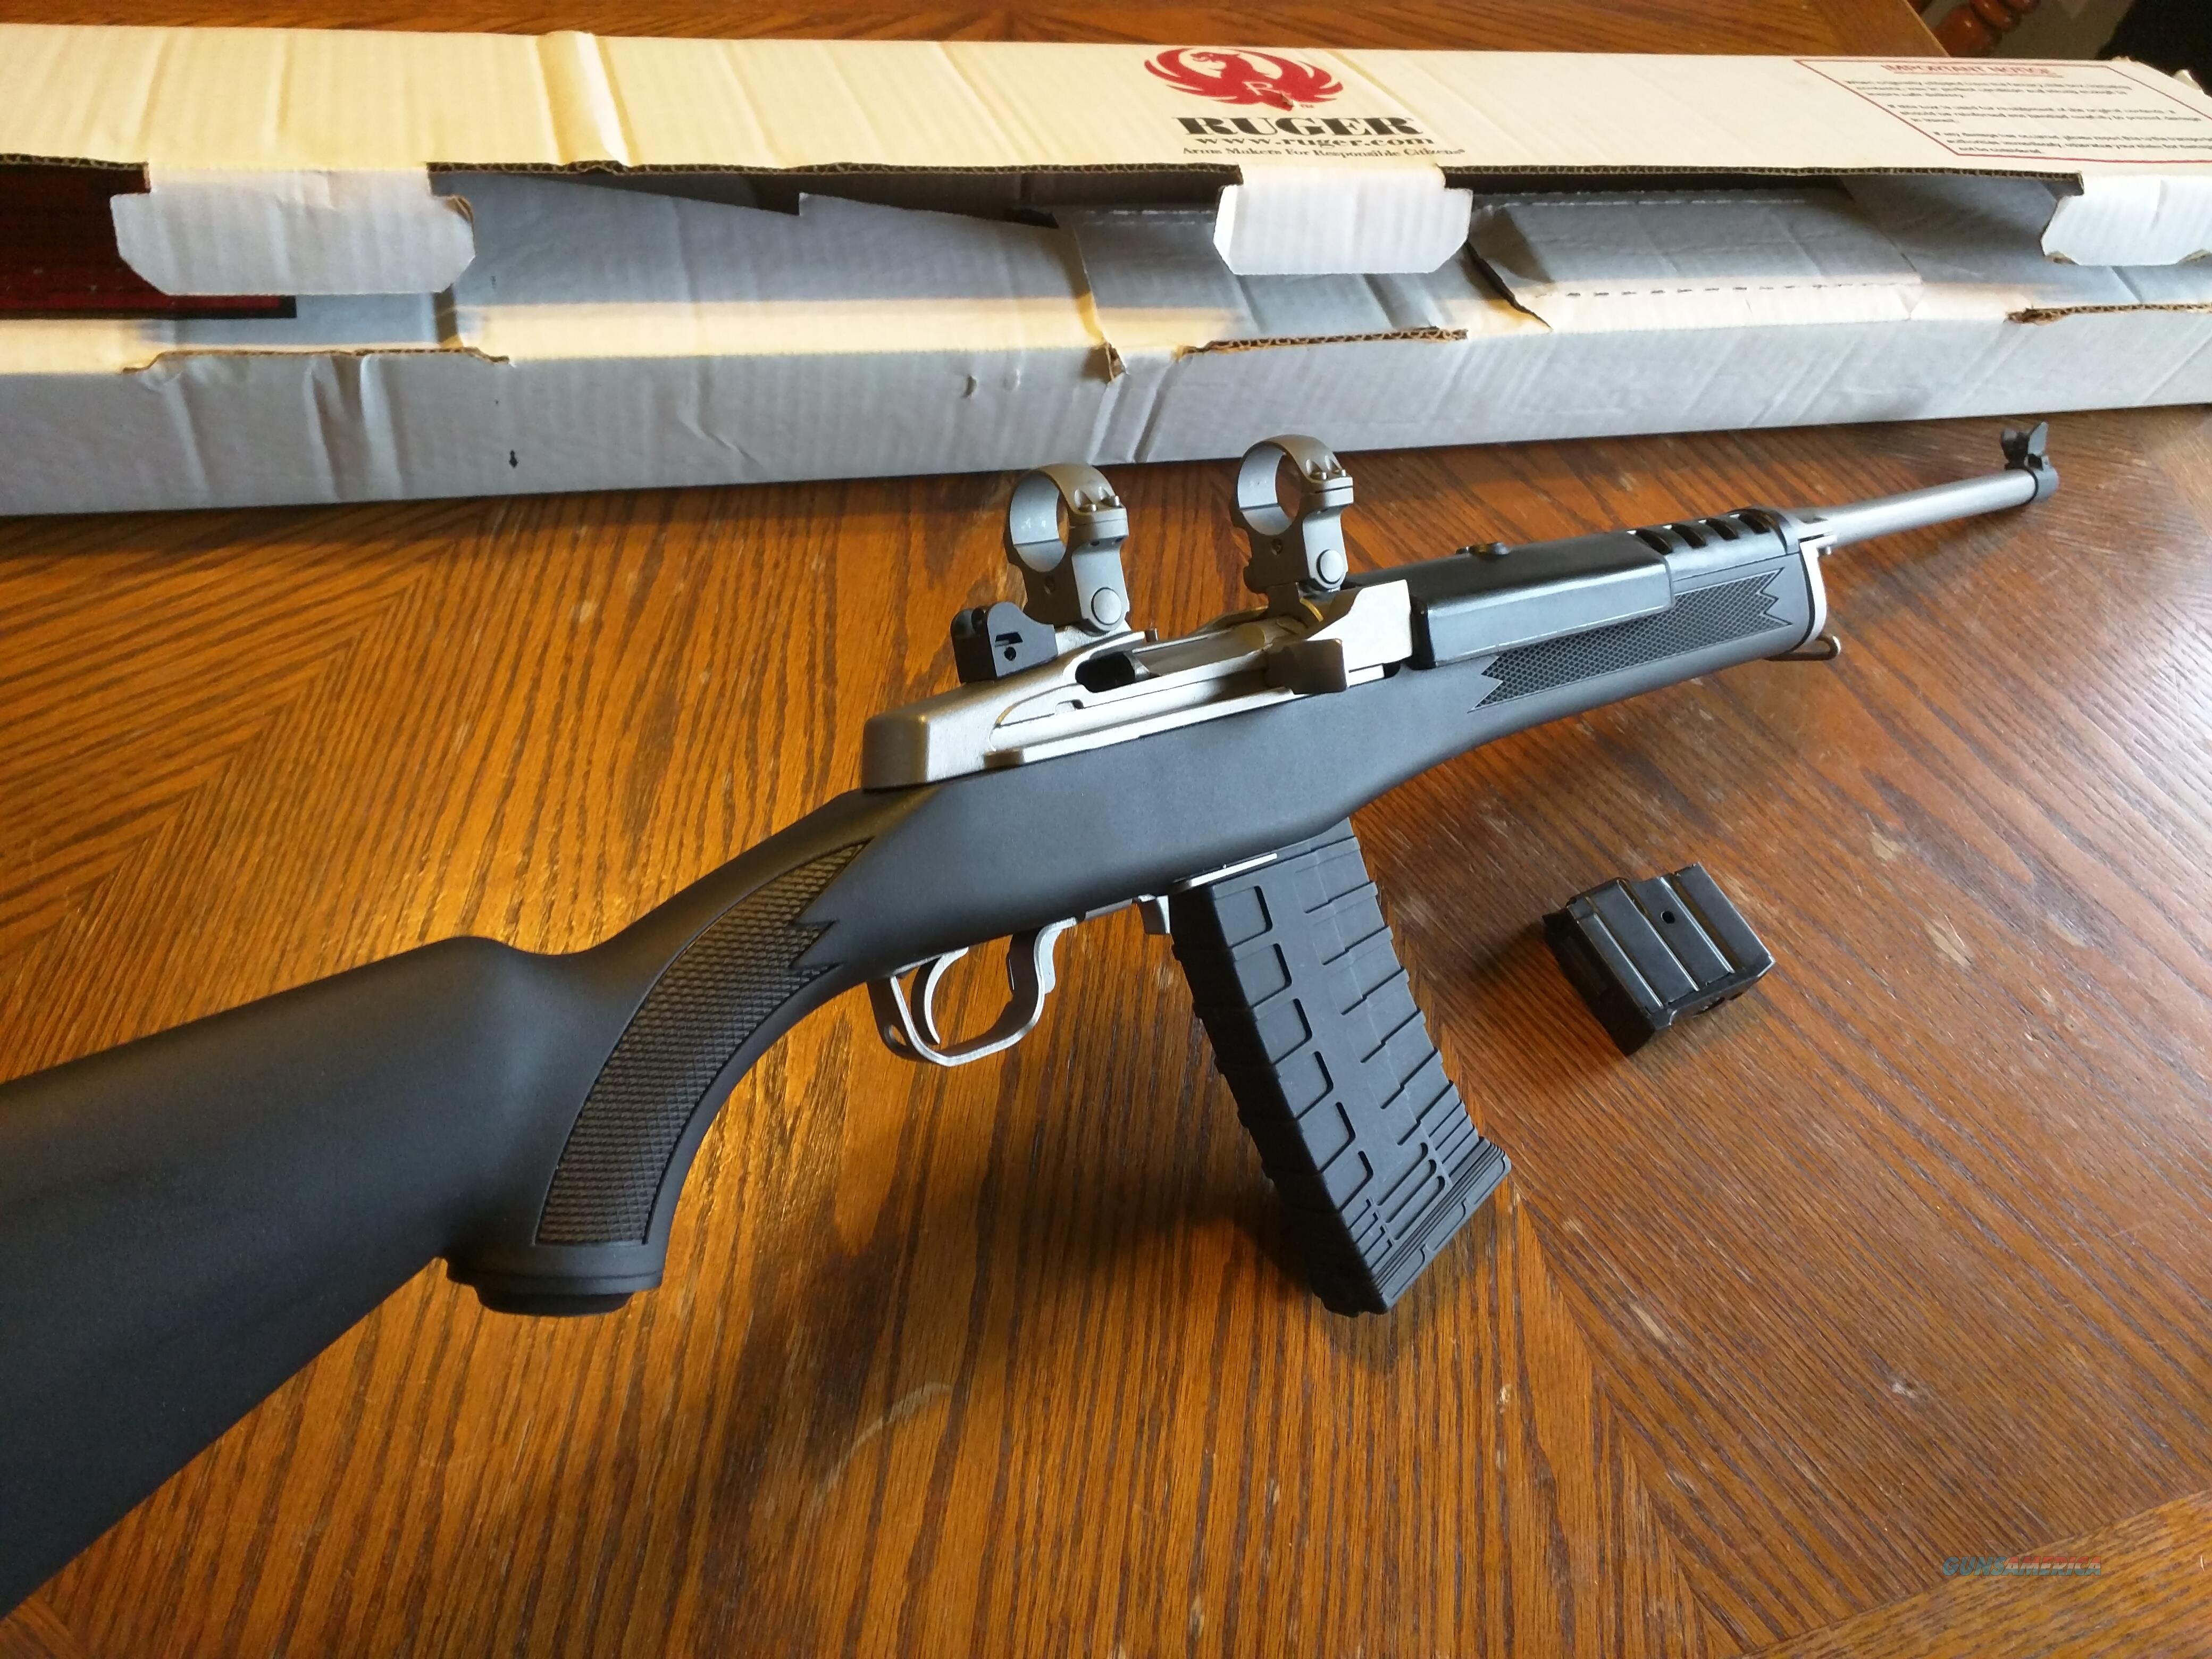 Ruger Mini 14 Ranch Rifle 223 Rem Caliber For Sale - Bank2home.com